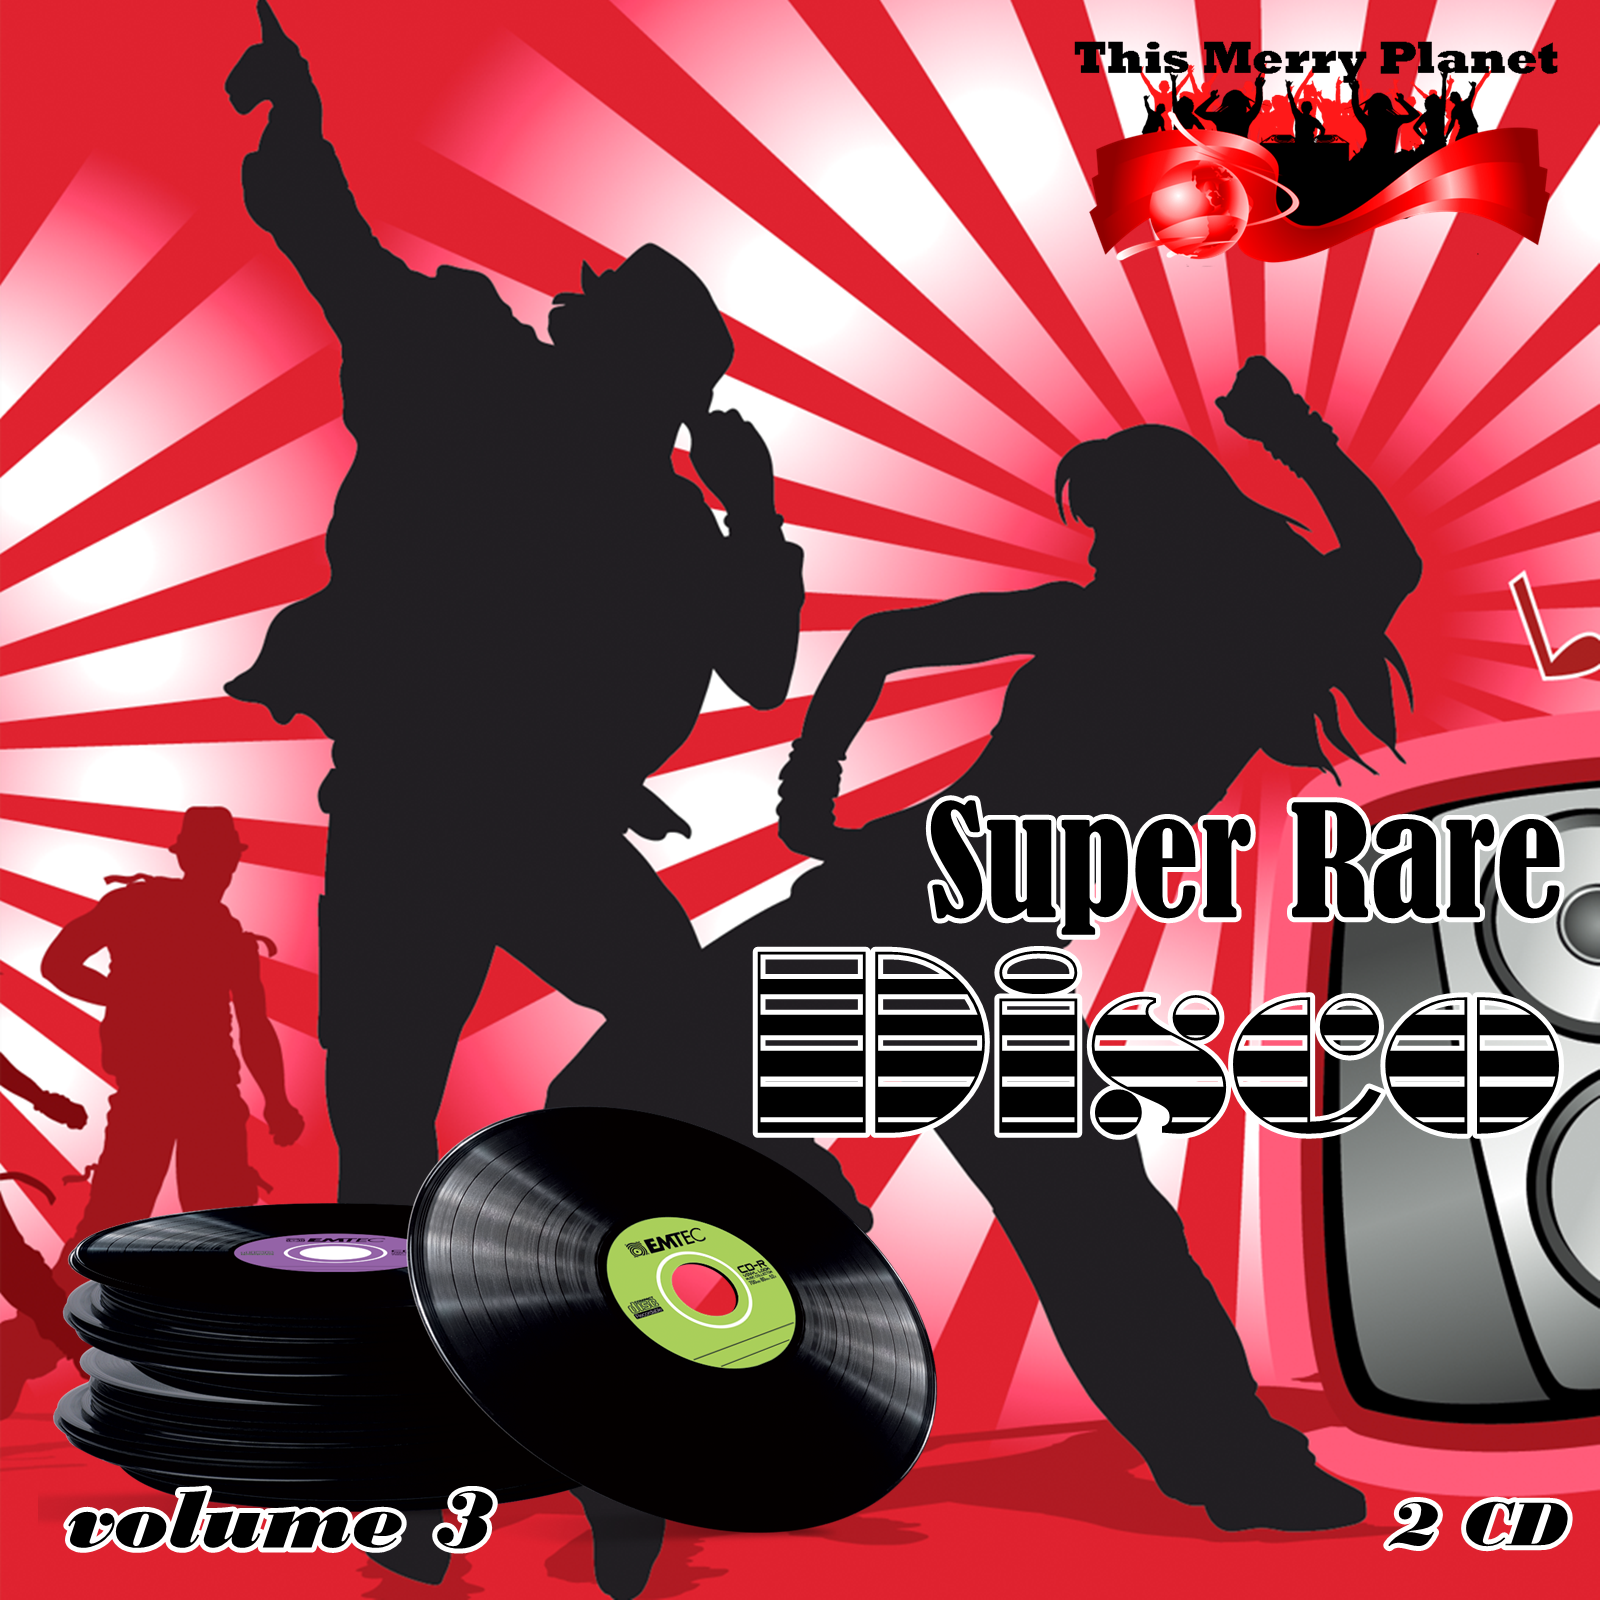 Disco Planet mp3. Super rare Mixtape Vol 1. Disco rare Raisins Vol. 11. Super rare музыка.